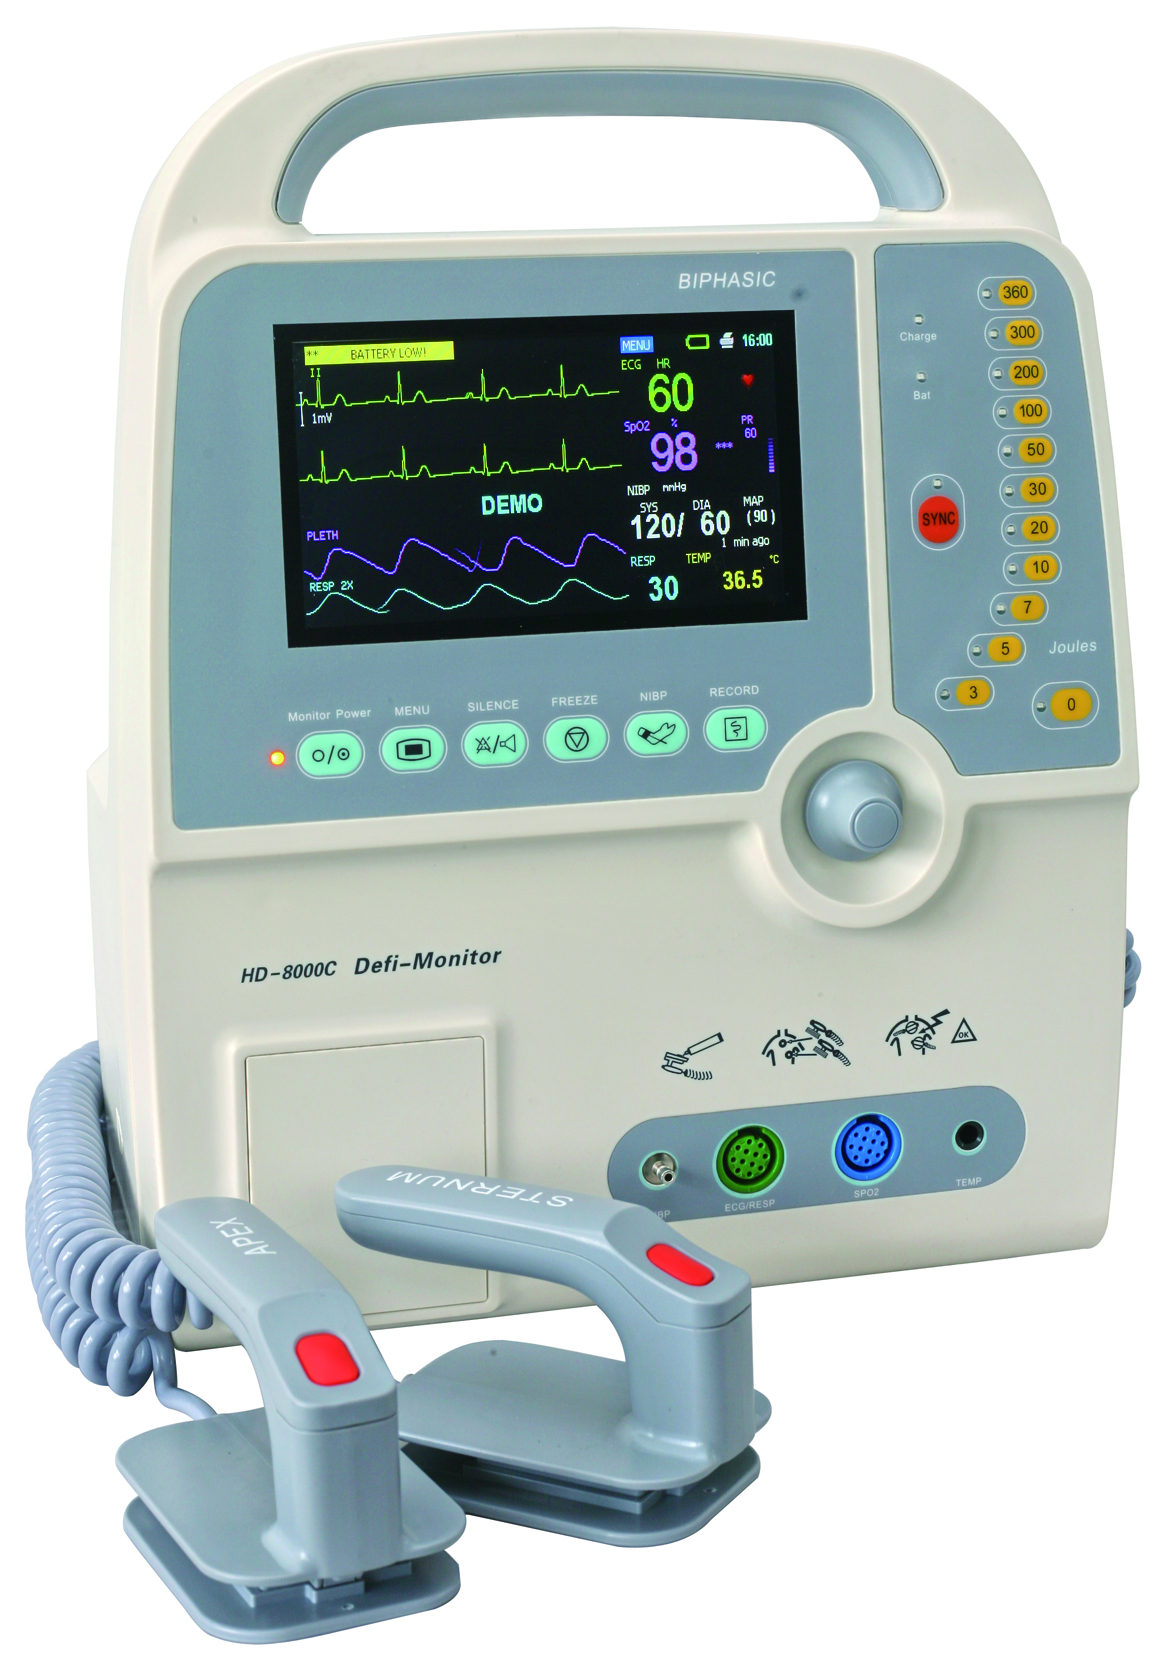 LG-HD8000C Defibrillator for Medical Use